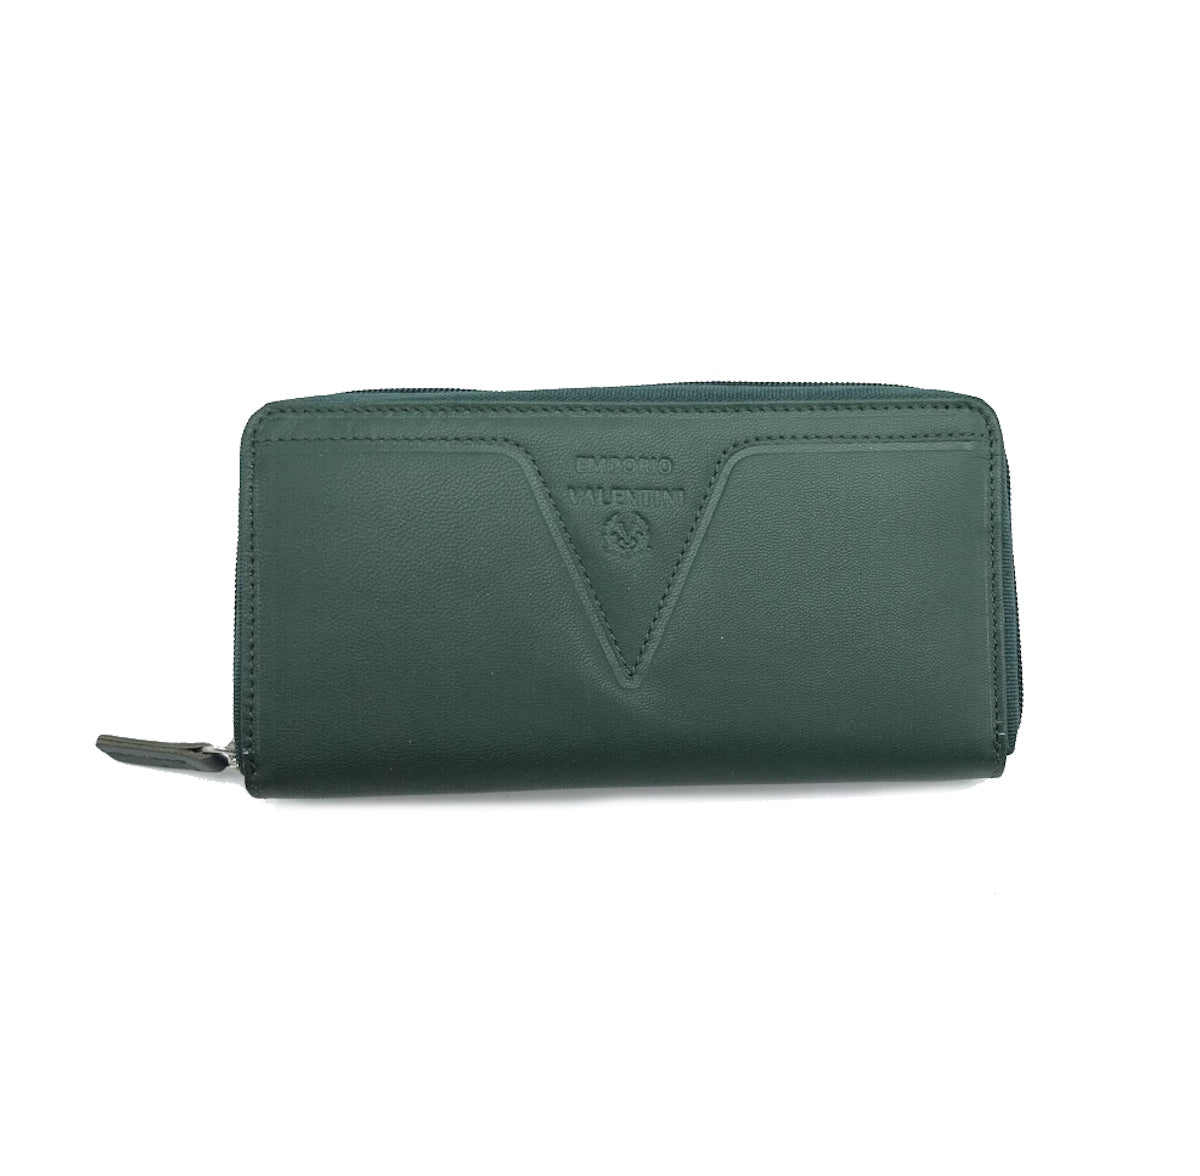 Genuine leather wallet, Emporio Valentini, for women, art. 7589